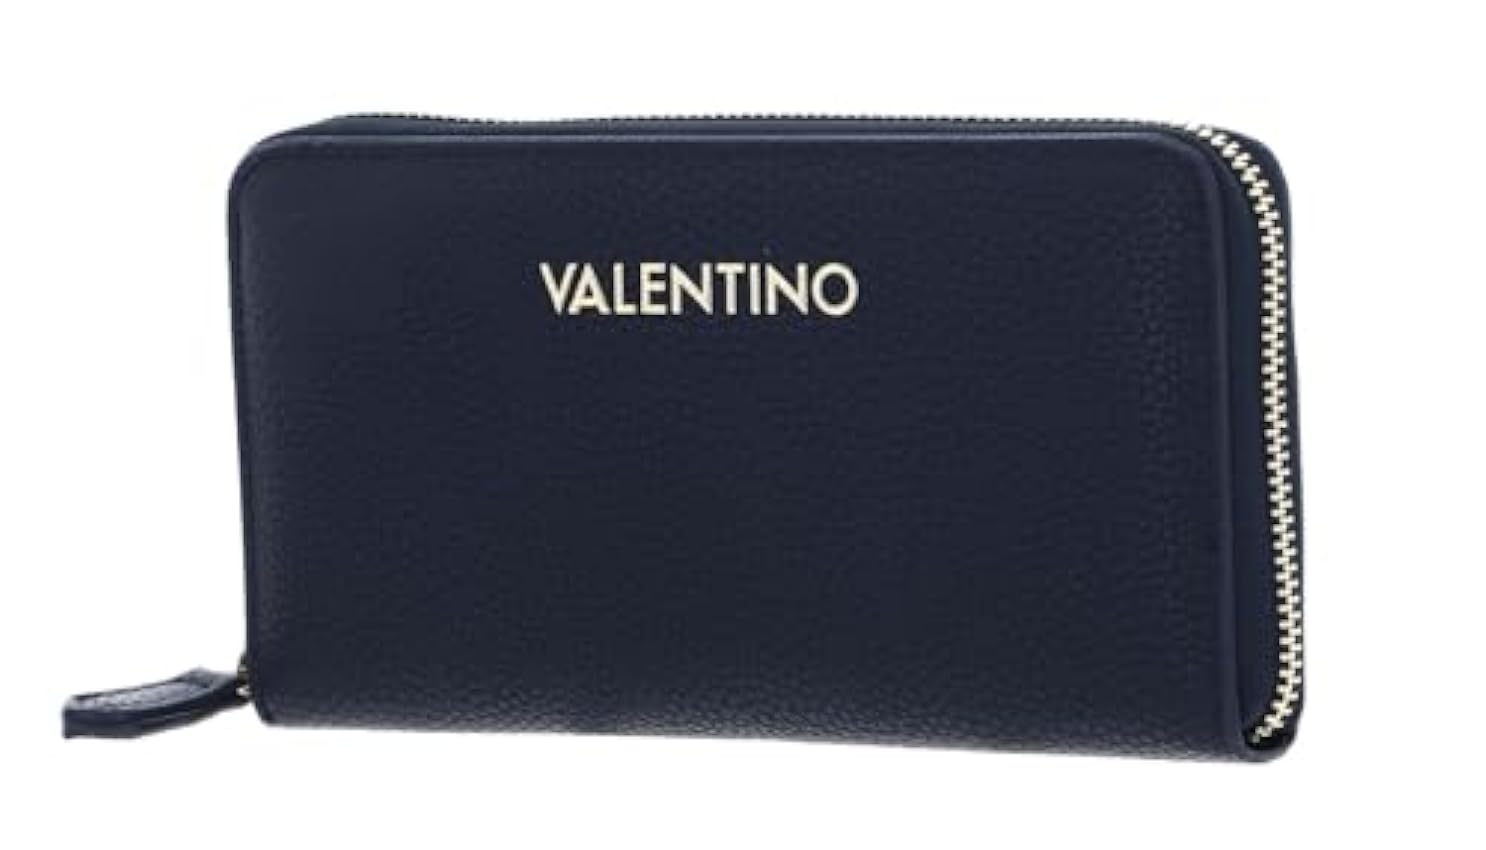 VALENTINO Brixton VPS7LX155 Zip Around Wallet; Color: BLU i1d4qrNI